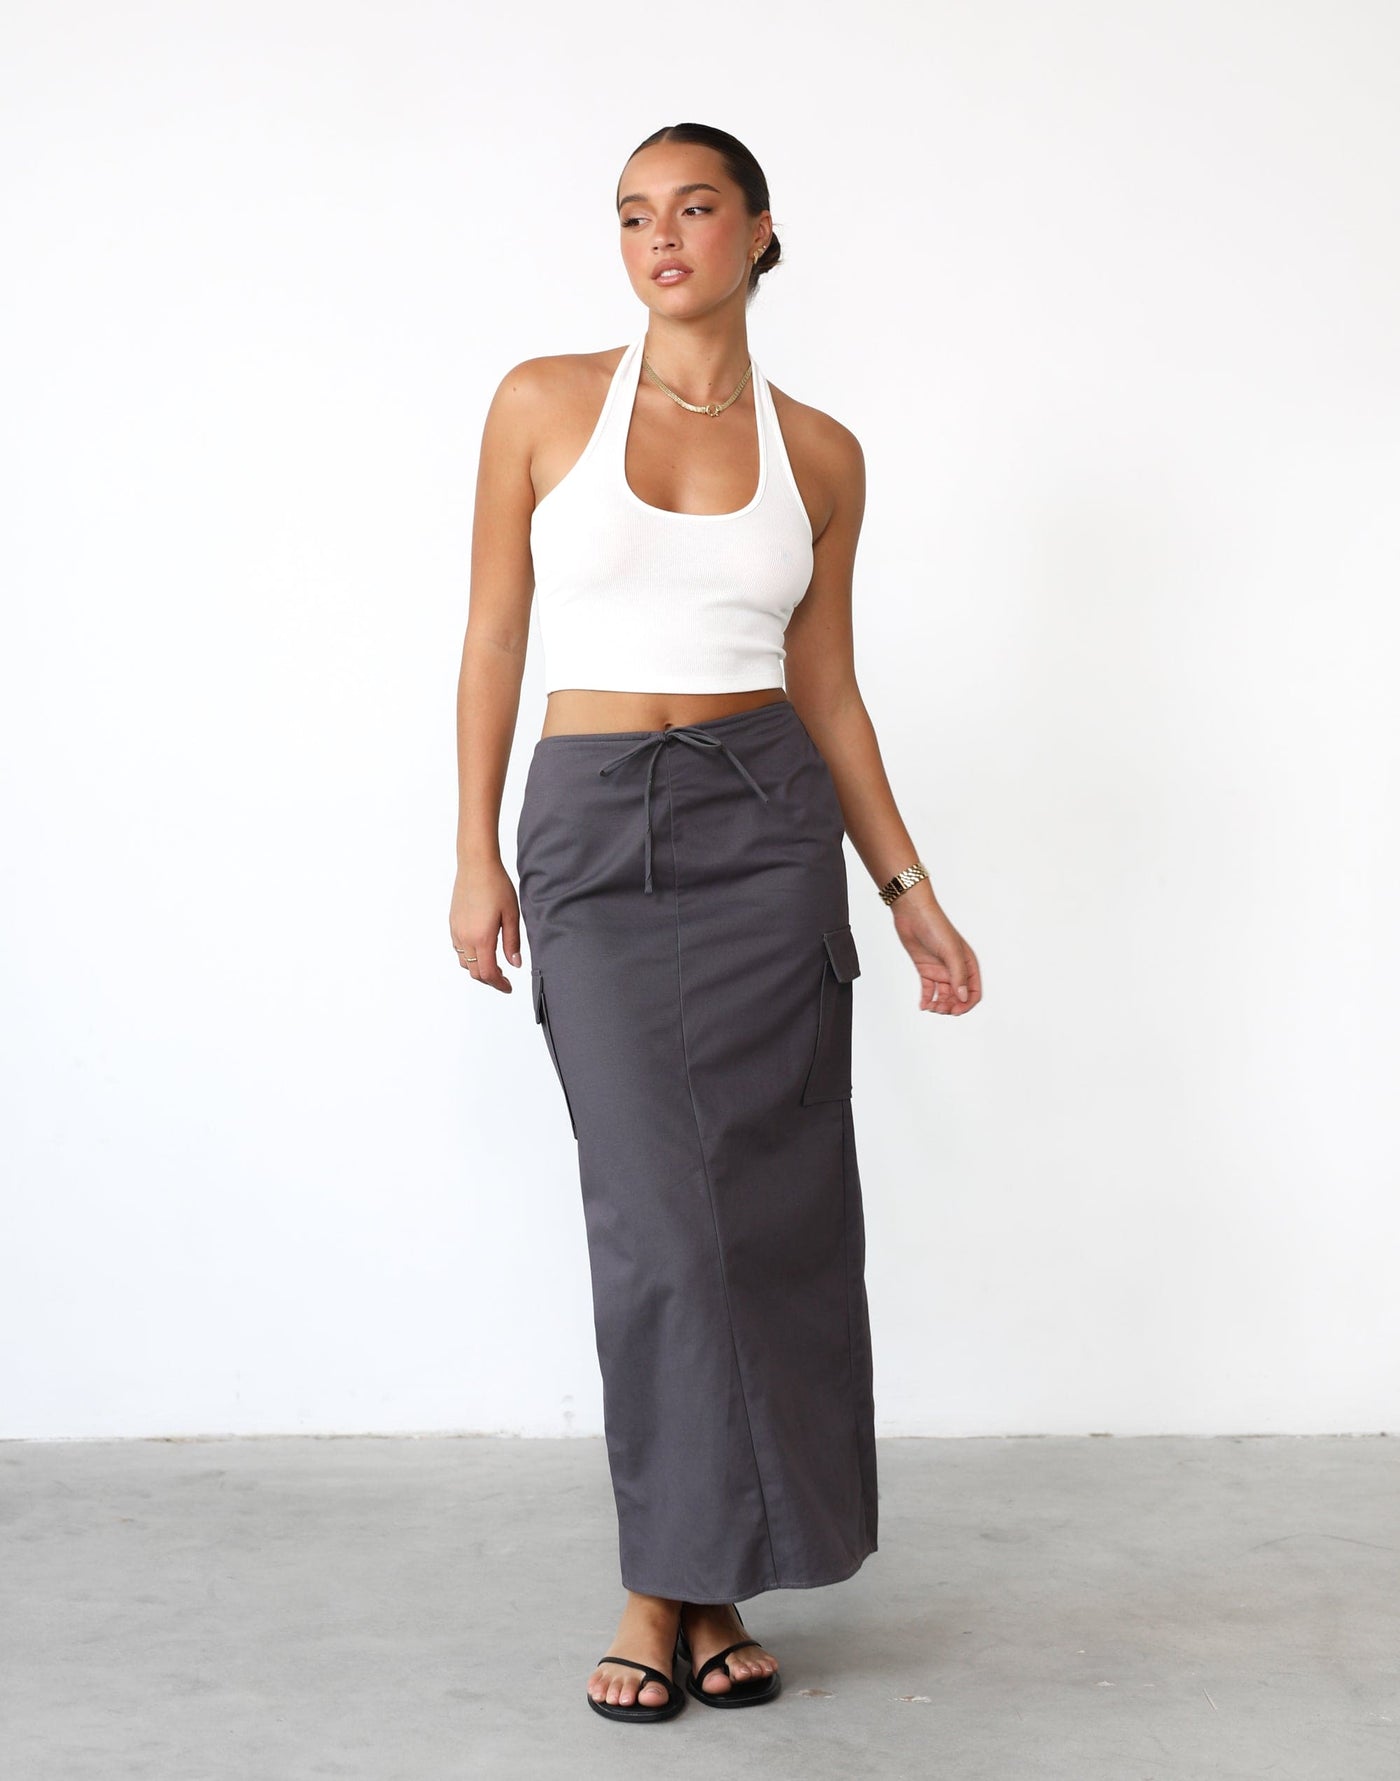 Not Now Maxi Skirt (Slate) - Adjustable Waist Drawstring Cargo Maxi Skirt With Slit - Women's Skirt - Charcoal Clothing